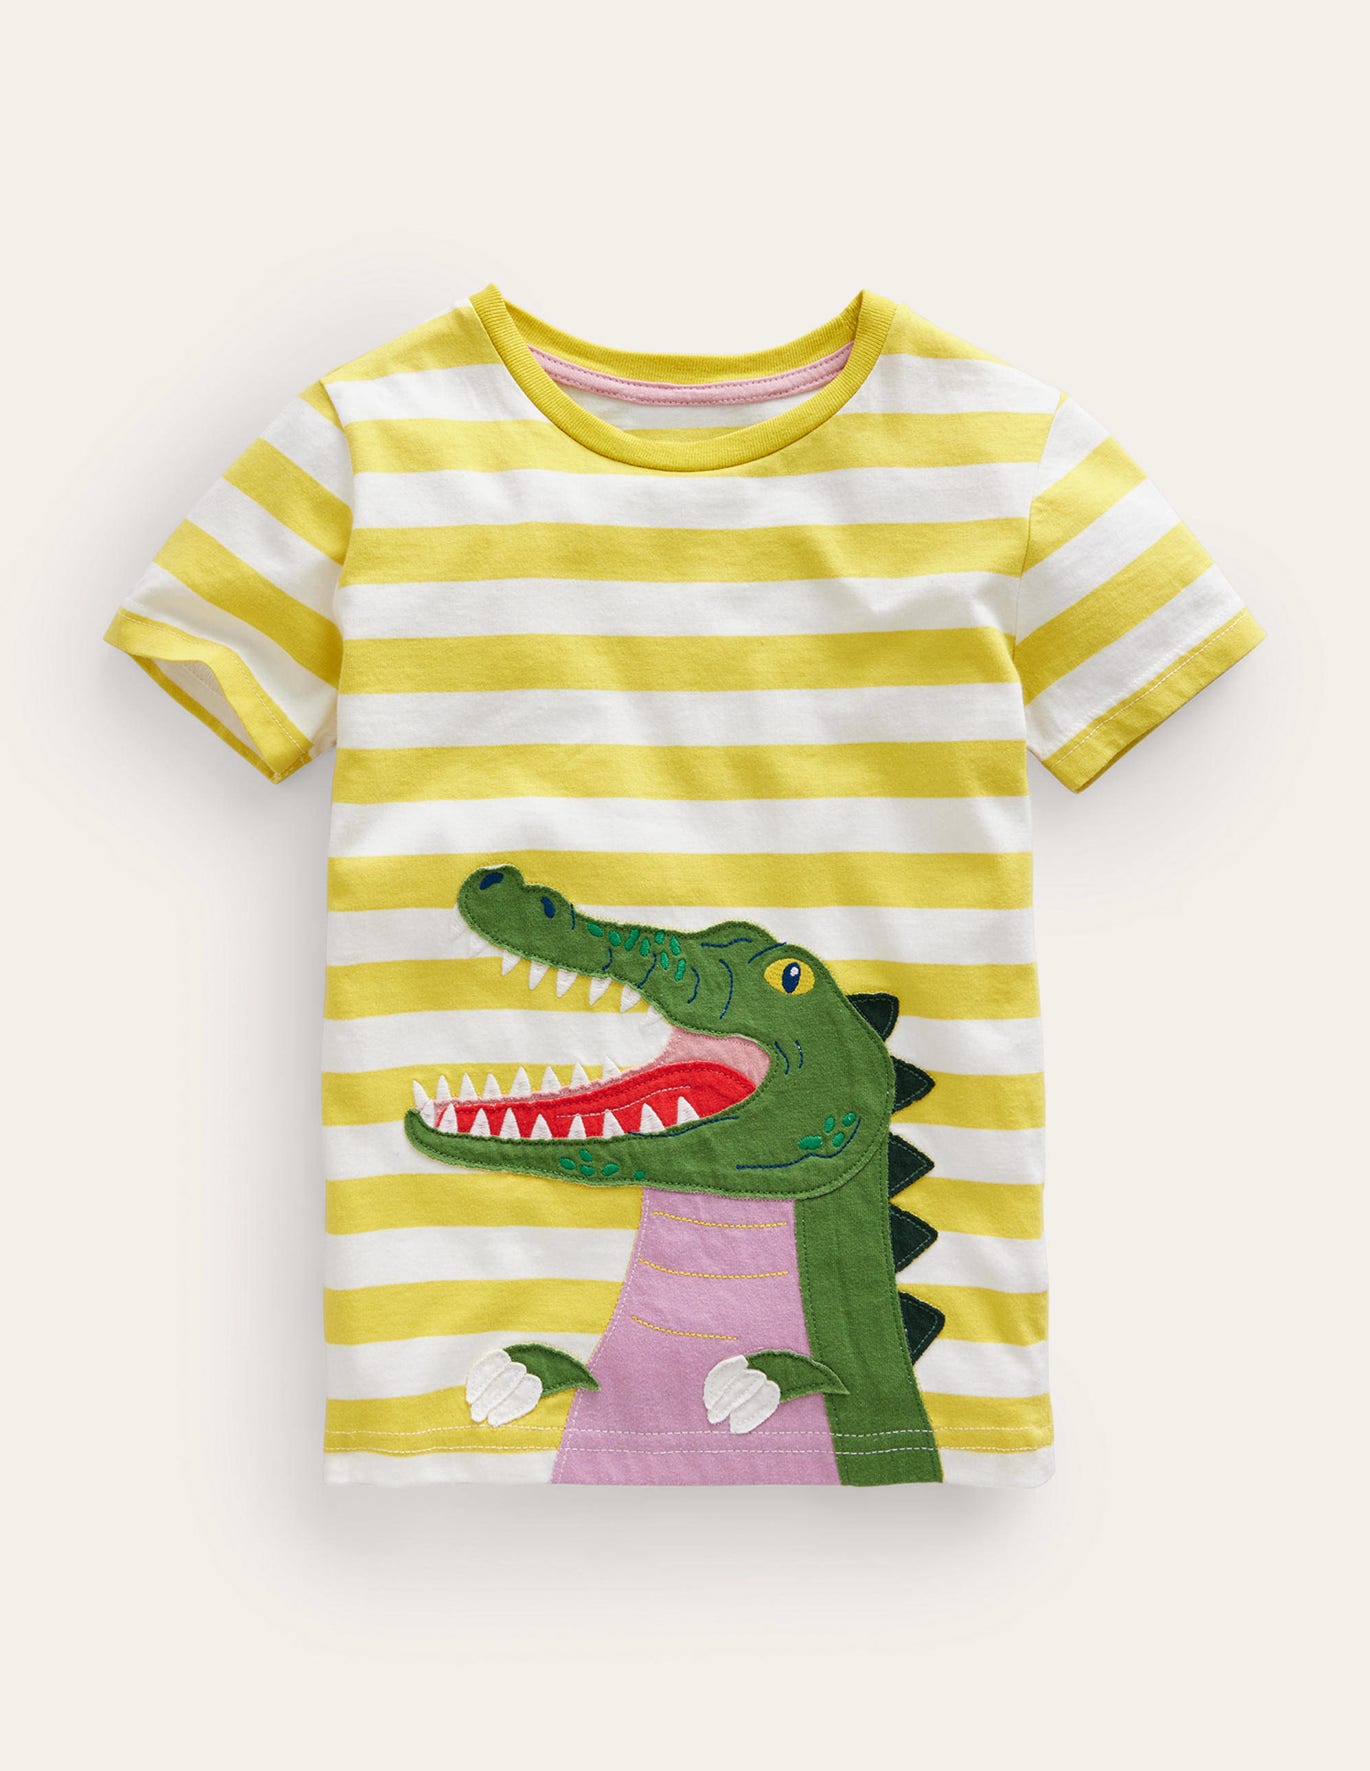 Boden Front & Back Applique T-shirt - Green Crocodile